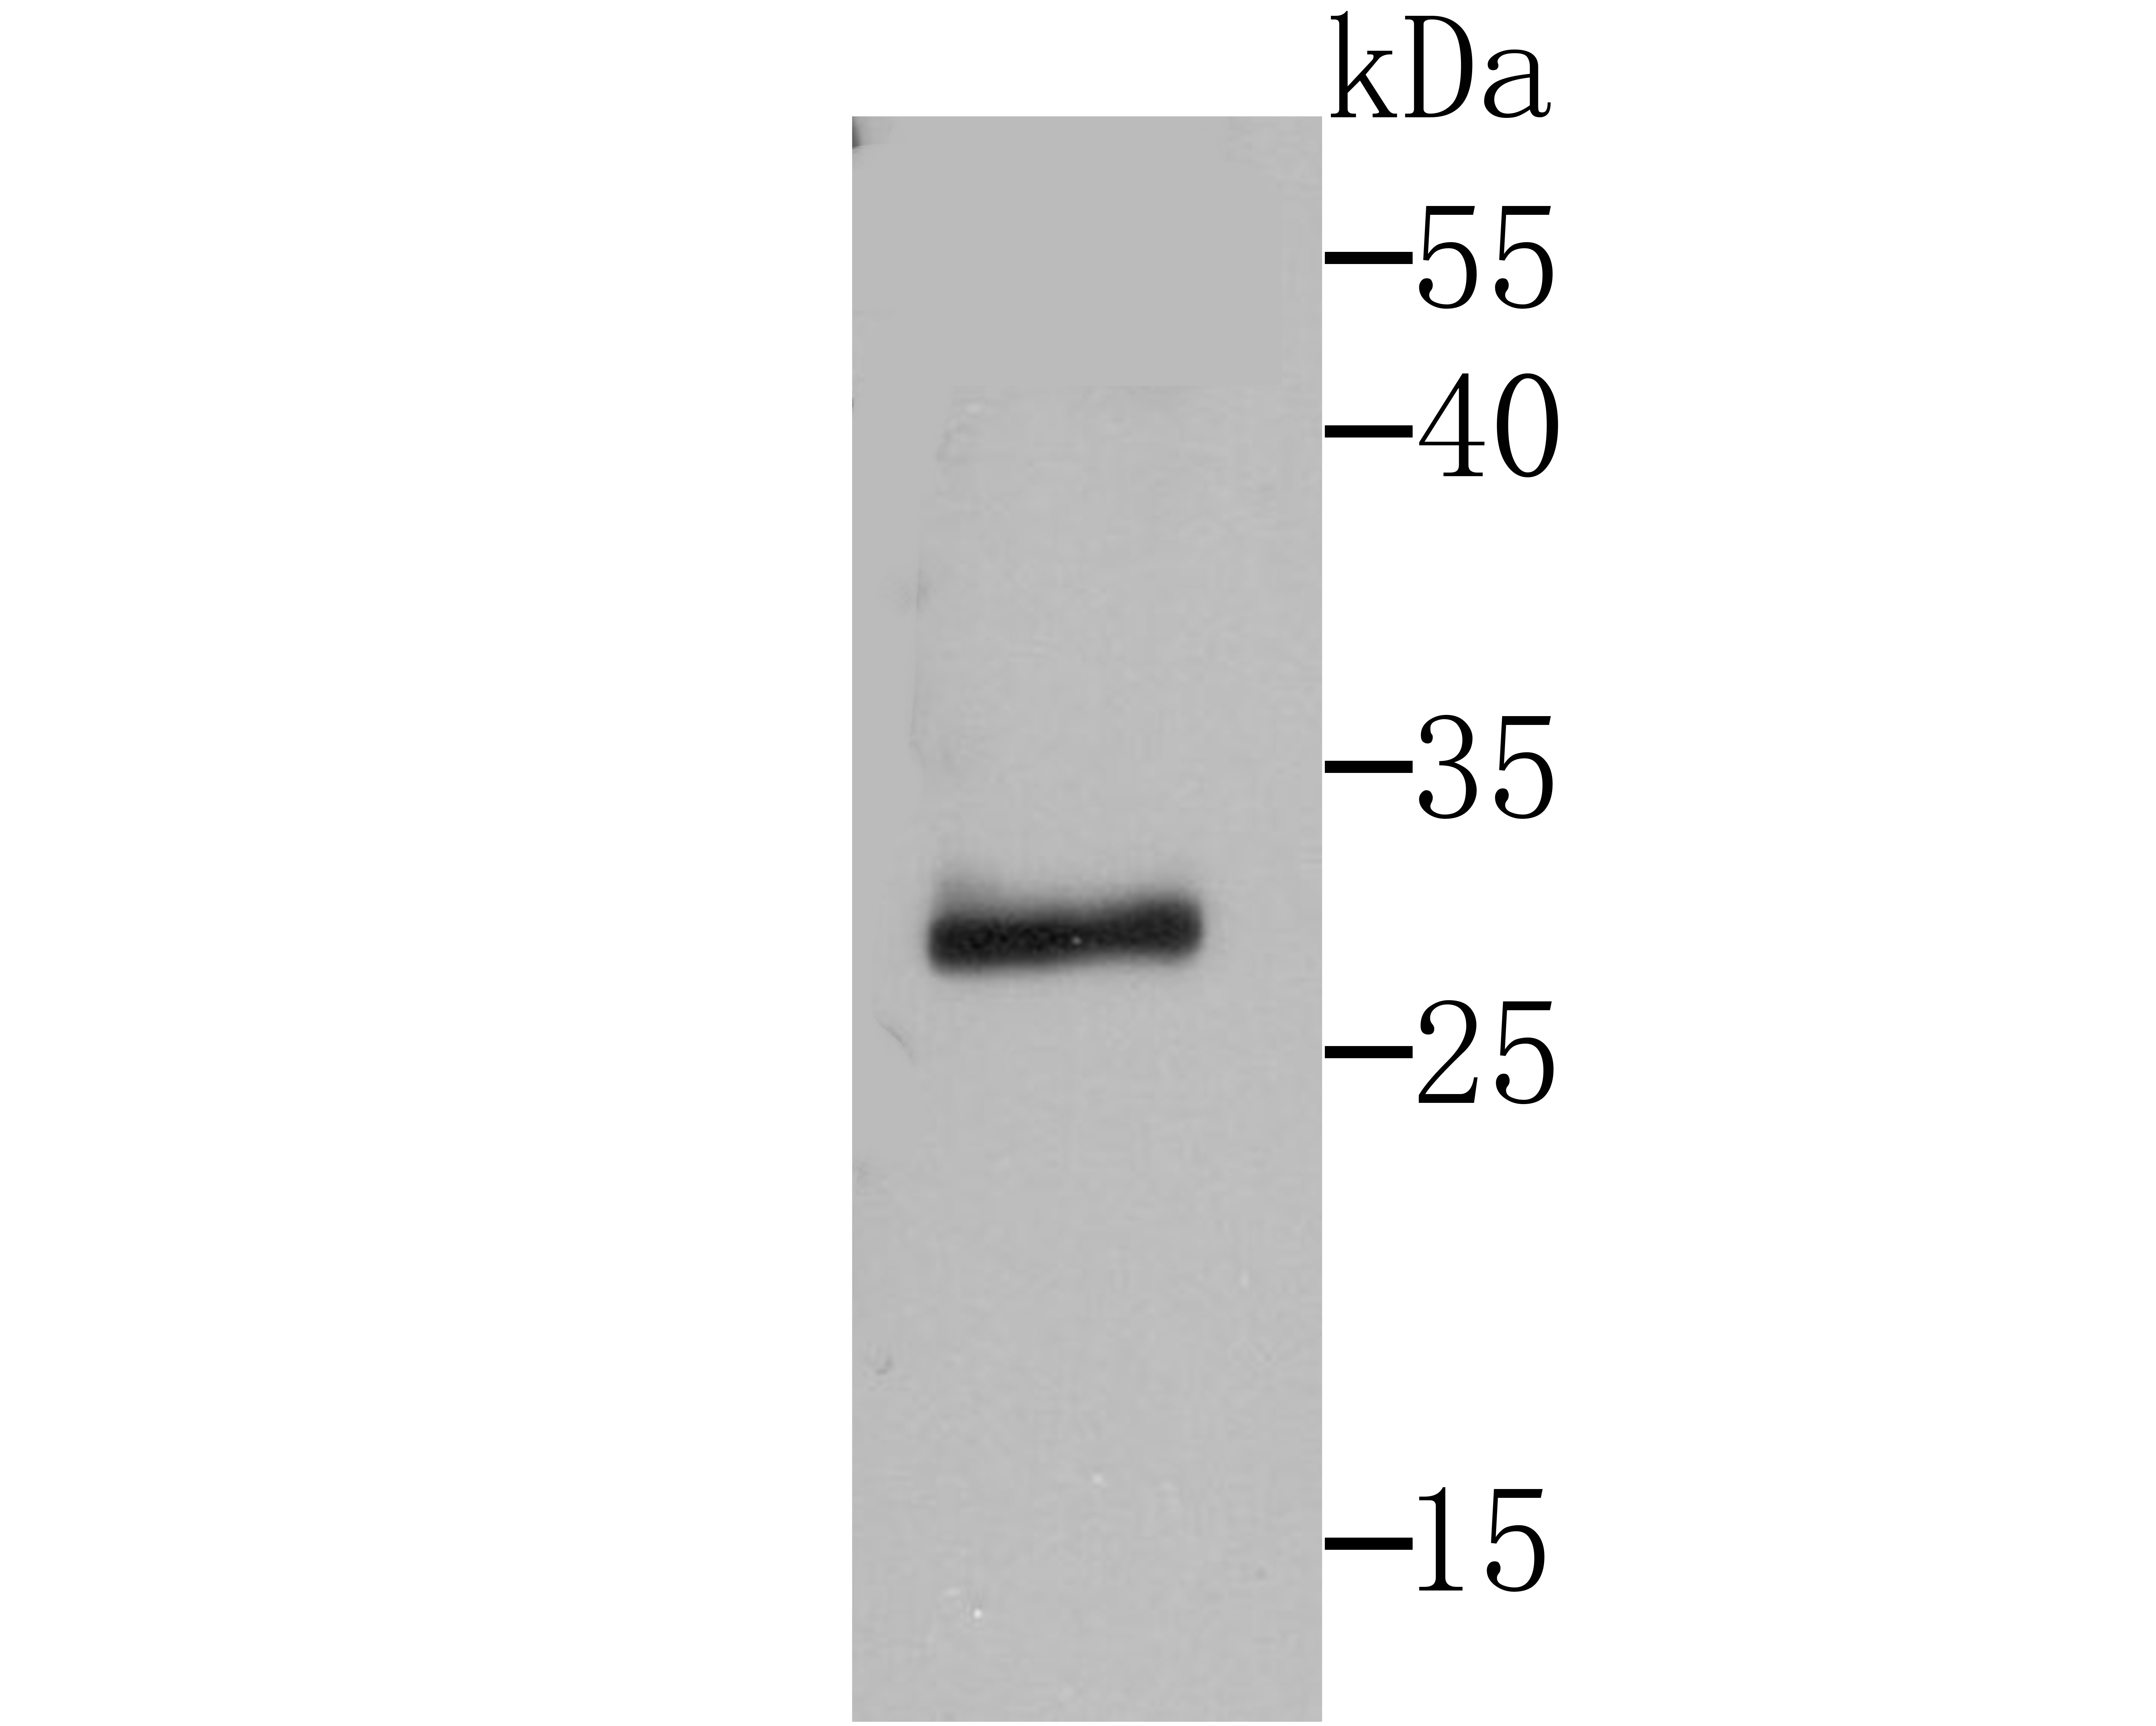 Western blot analysis of IL1 alpha on human lymph node lysates using anti-IL1 alpha antibody at 1/500 dilution.